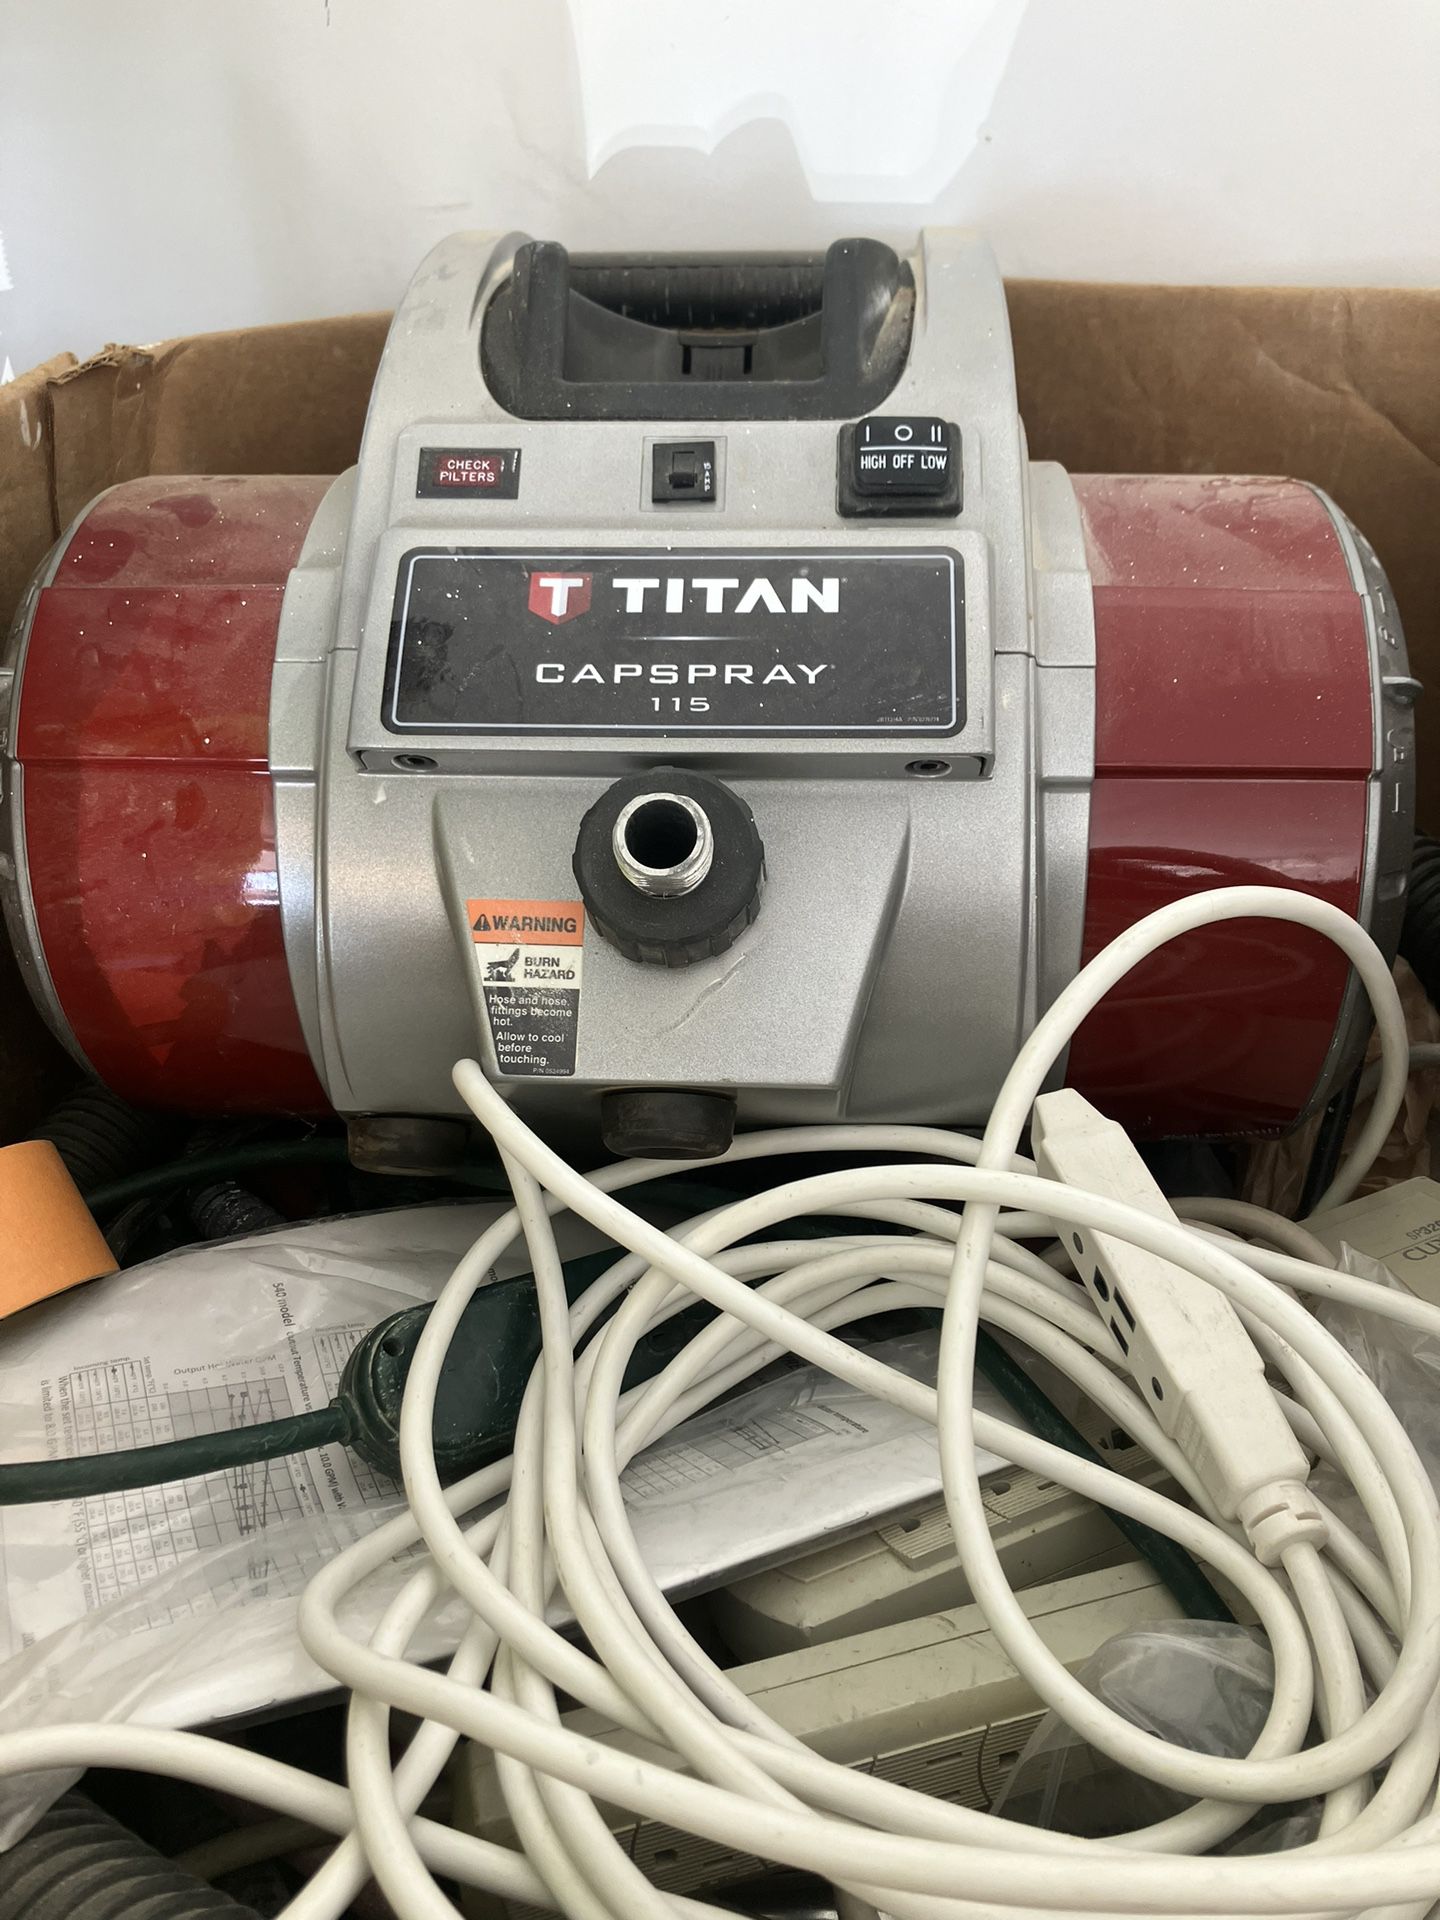 Titan Capspray 115